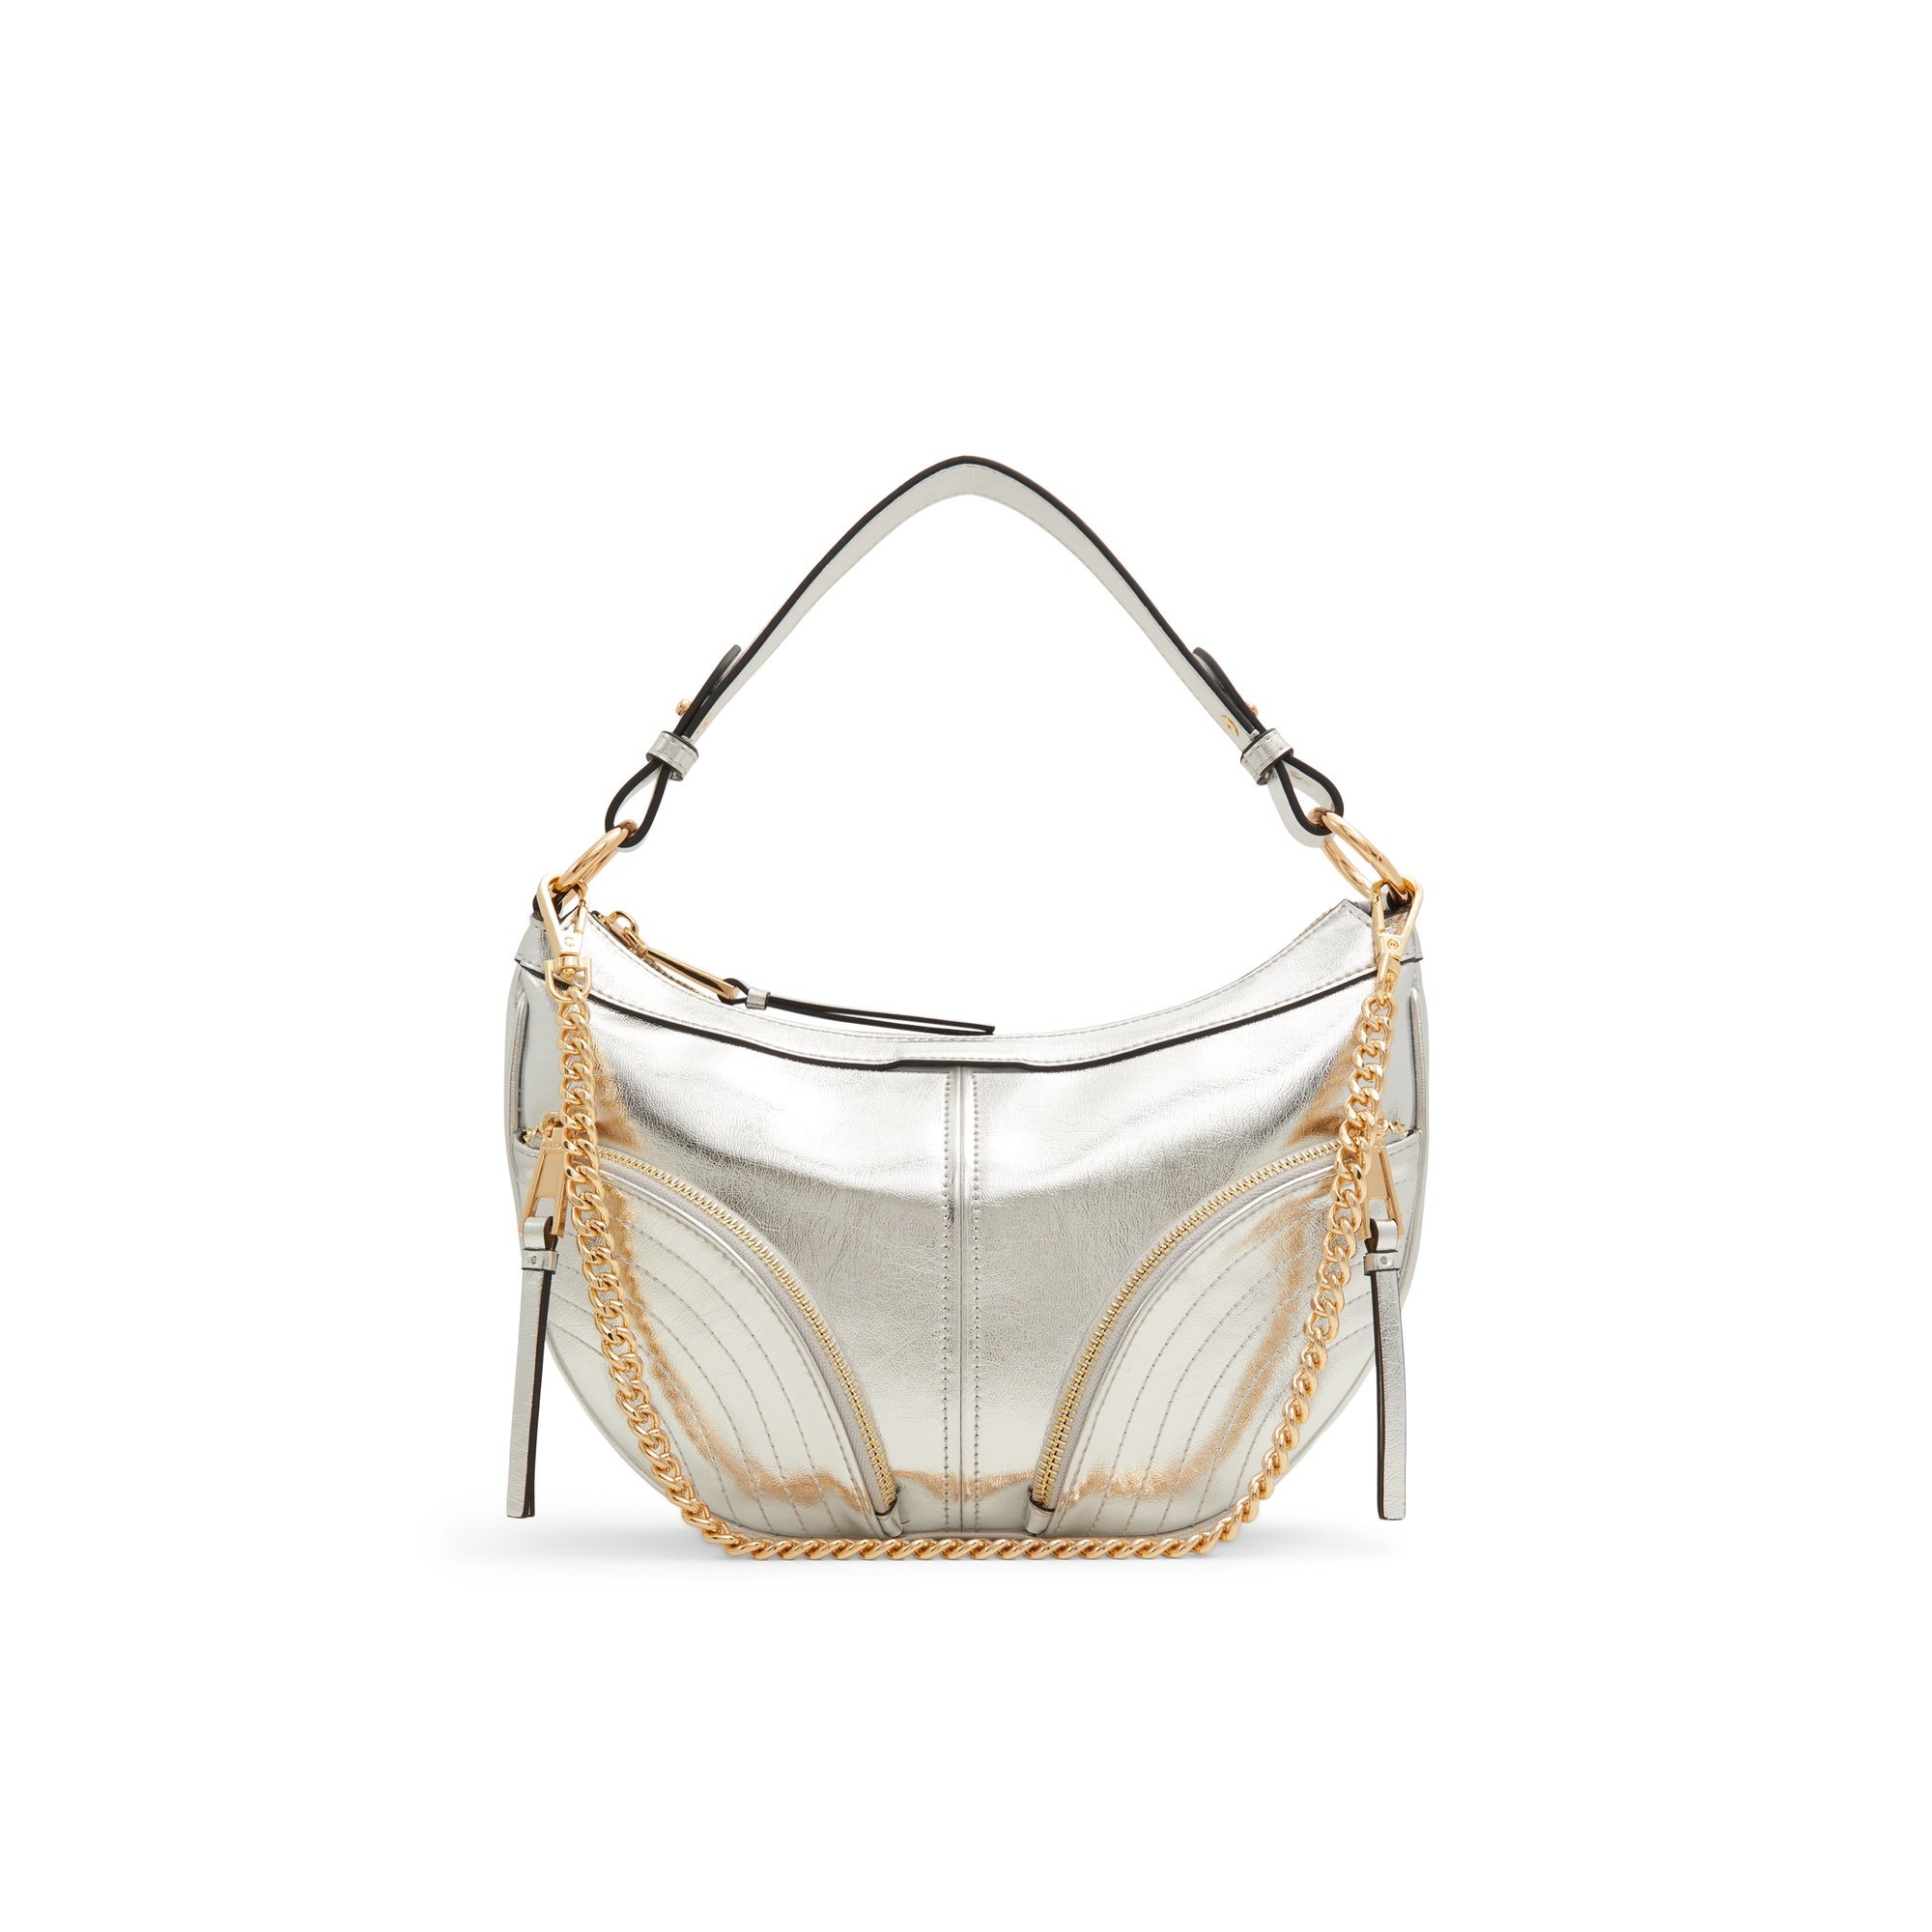 ALDO Beranyx - Women's Shoulder Bag Handbag - Silver